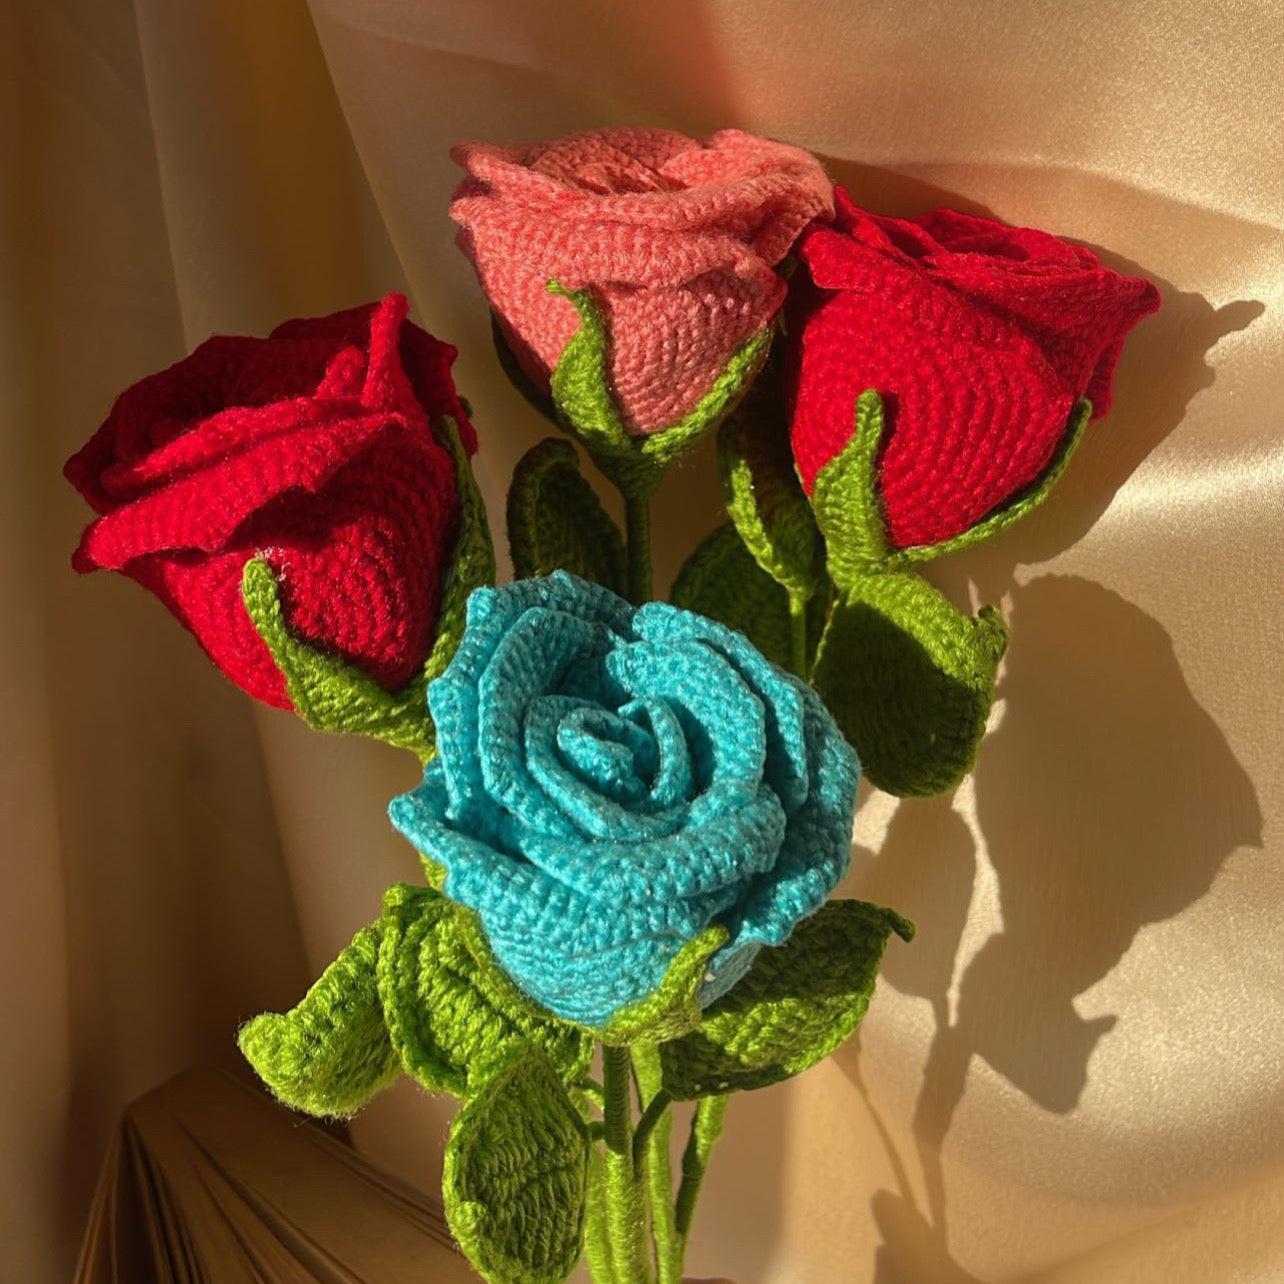 Big Rose crochet flowers - Crochet flowers : 1 piece - Ladywithcraft